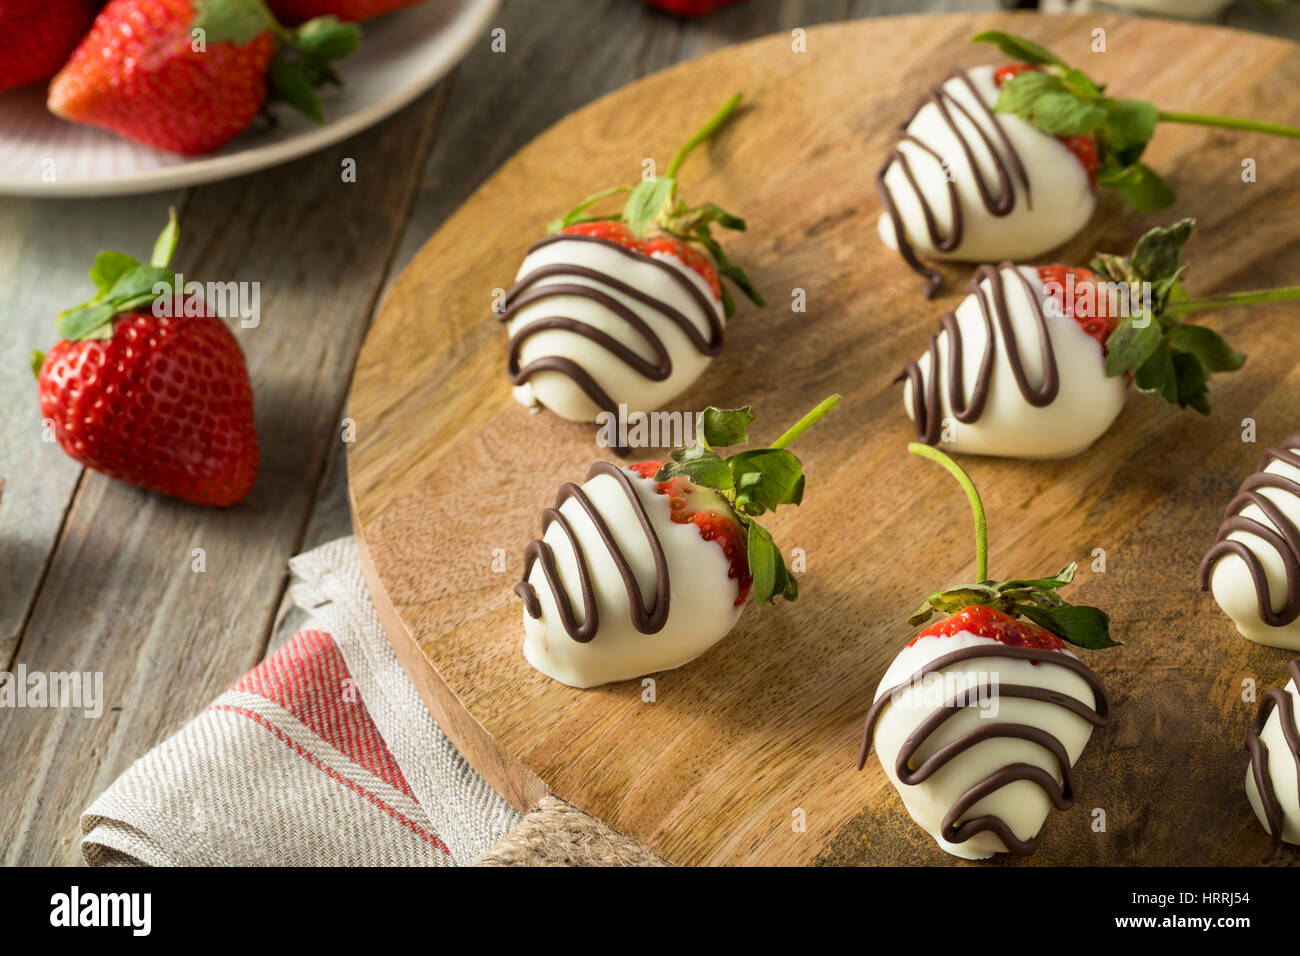 Homemade White Chocolate Covered Strawberries for Valentine's Day Stock Photo